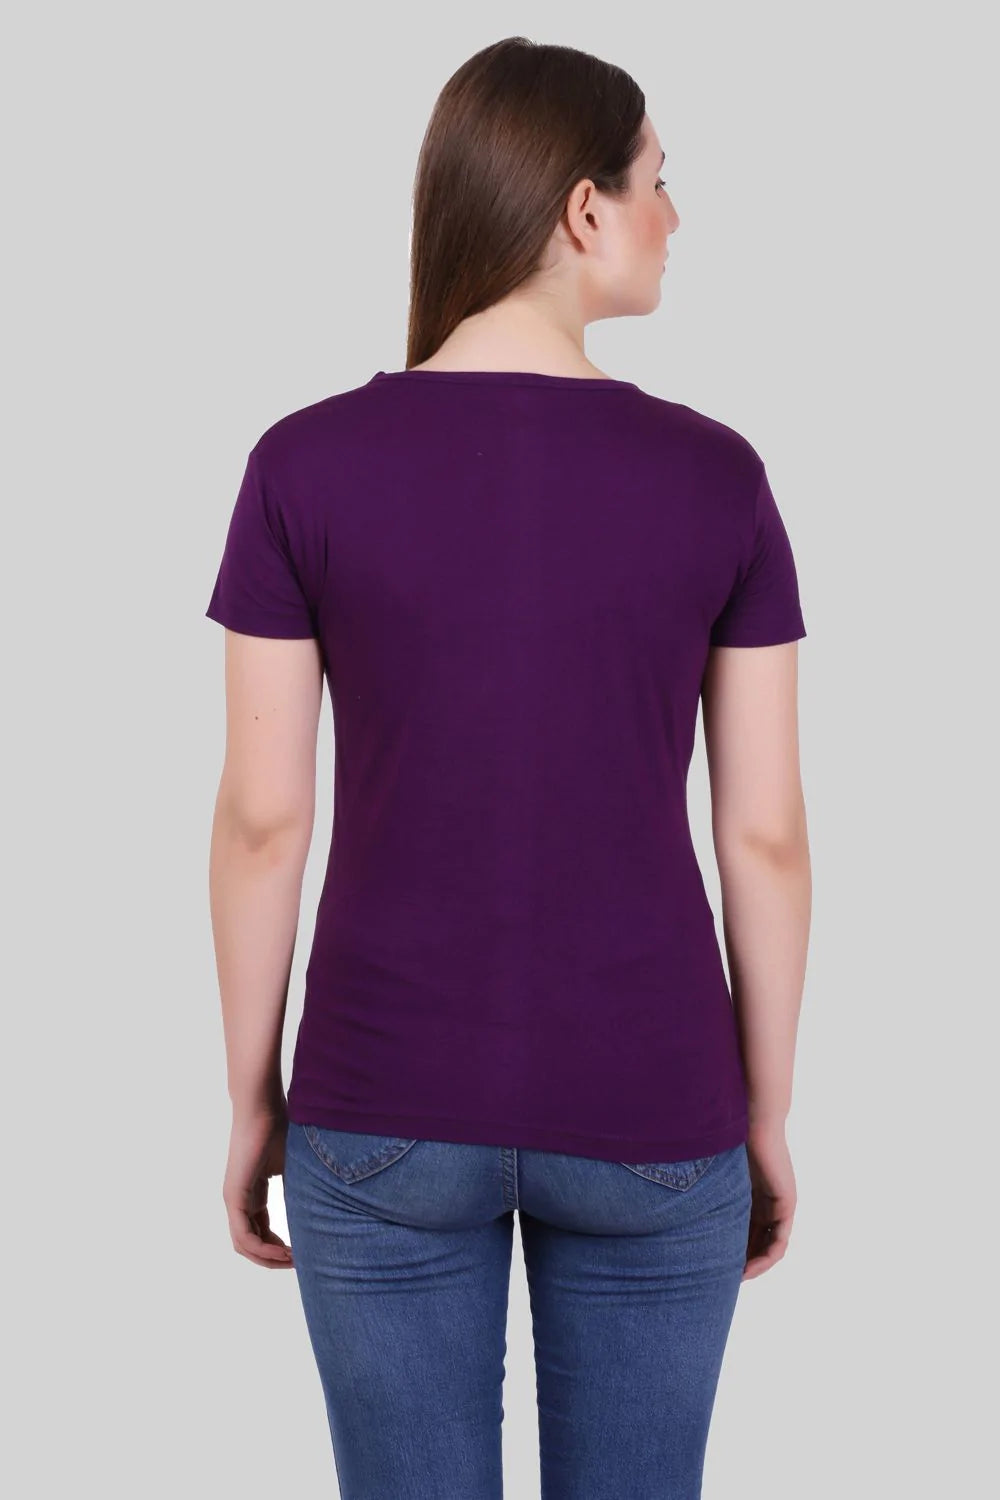 Fleximaa Women's Cotton Plain V Neck Half Sleeve T-Shirt (Pack of 4) - Fleximaa